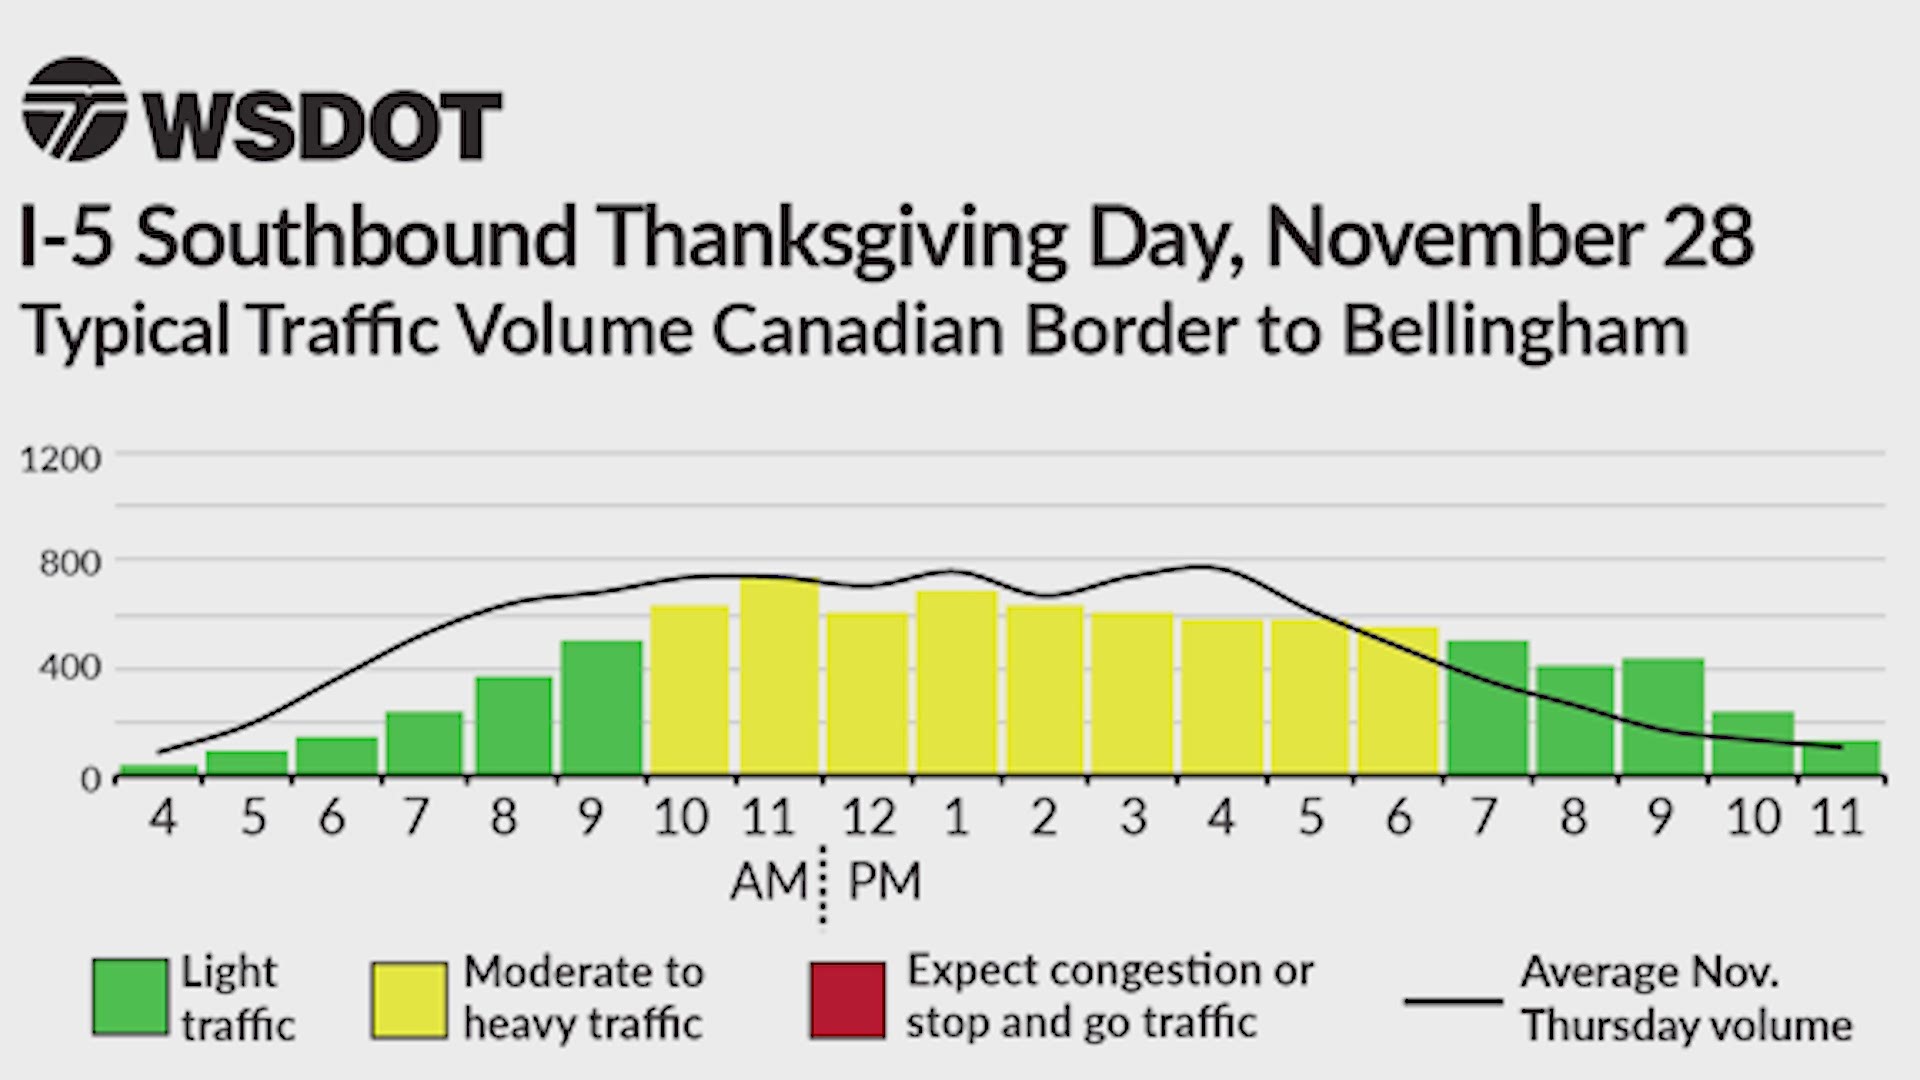 WSDOT estimated traffic volumes for Thursday, November 28th